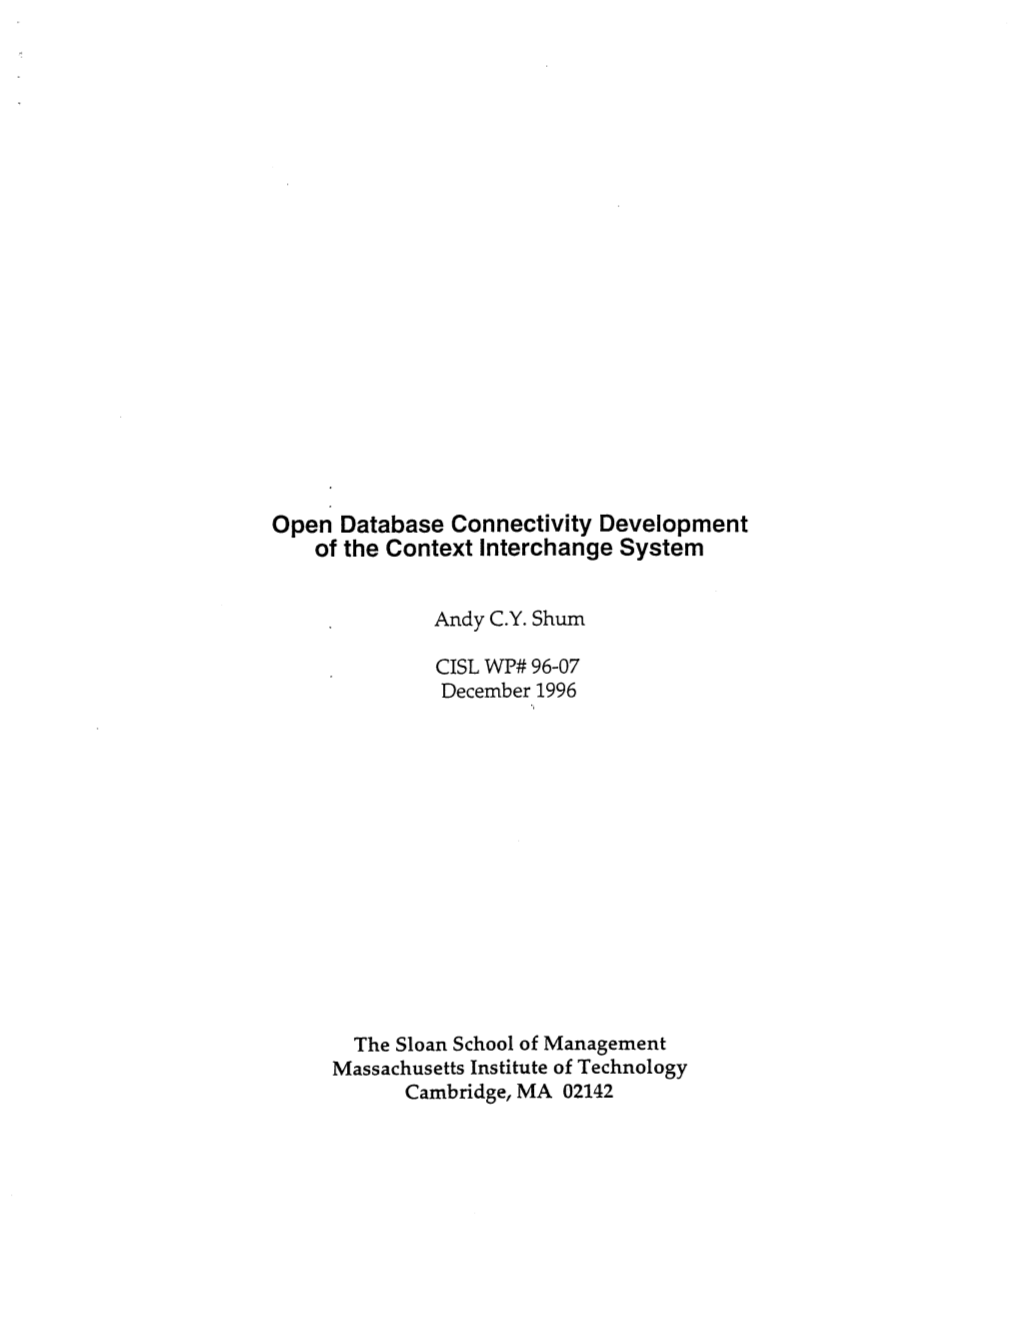 Open Database Connectivity Development of the Context Interchange System